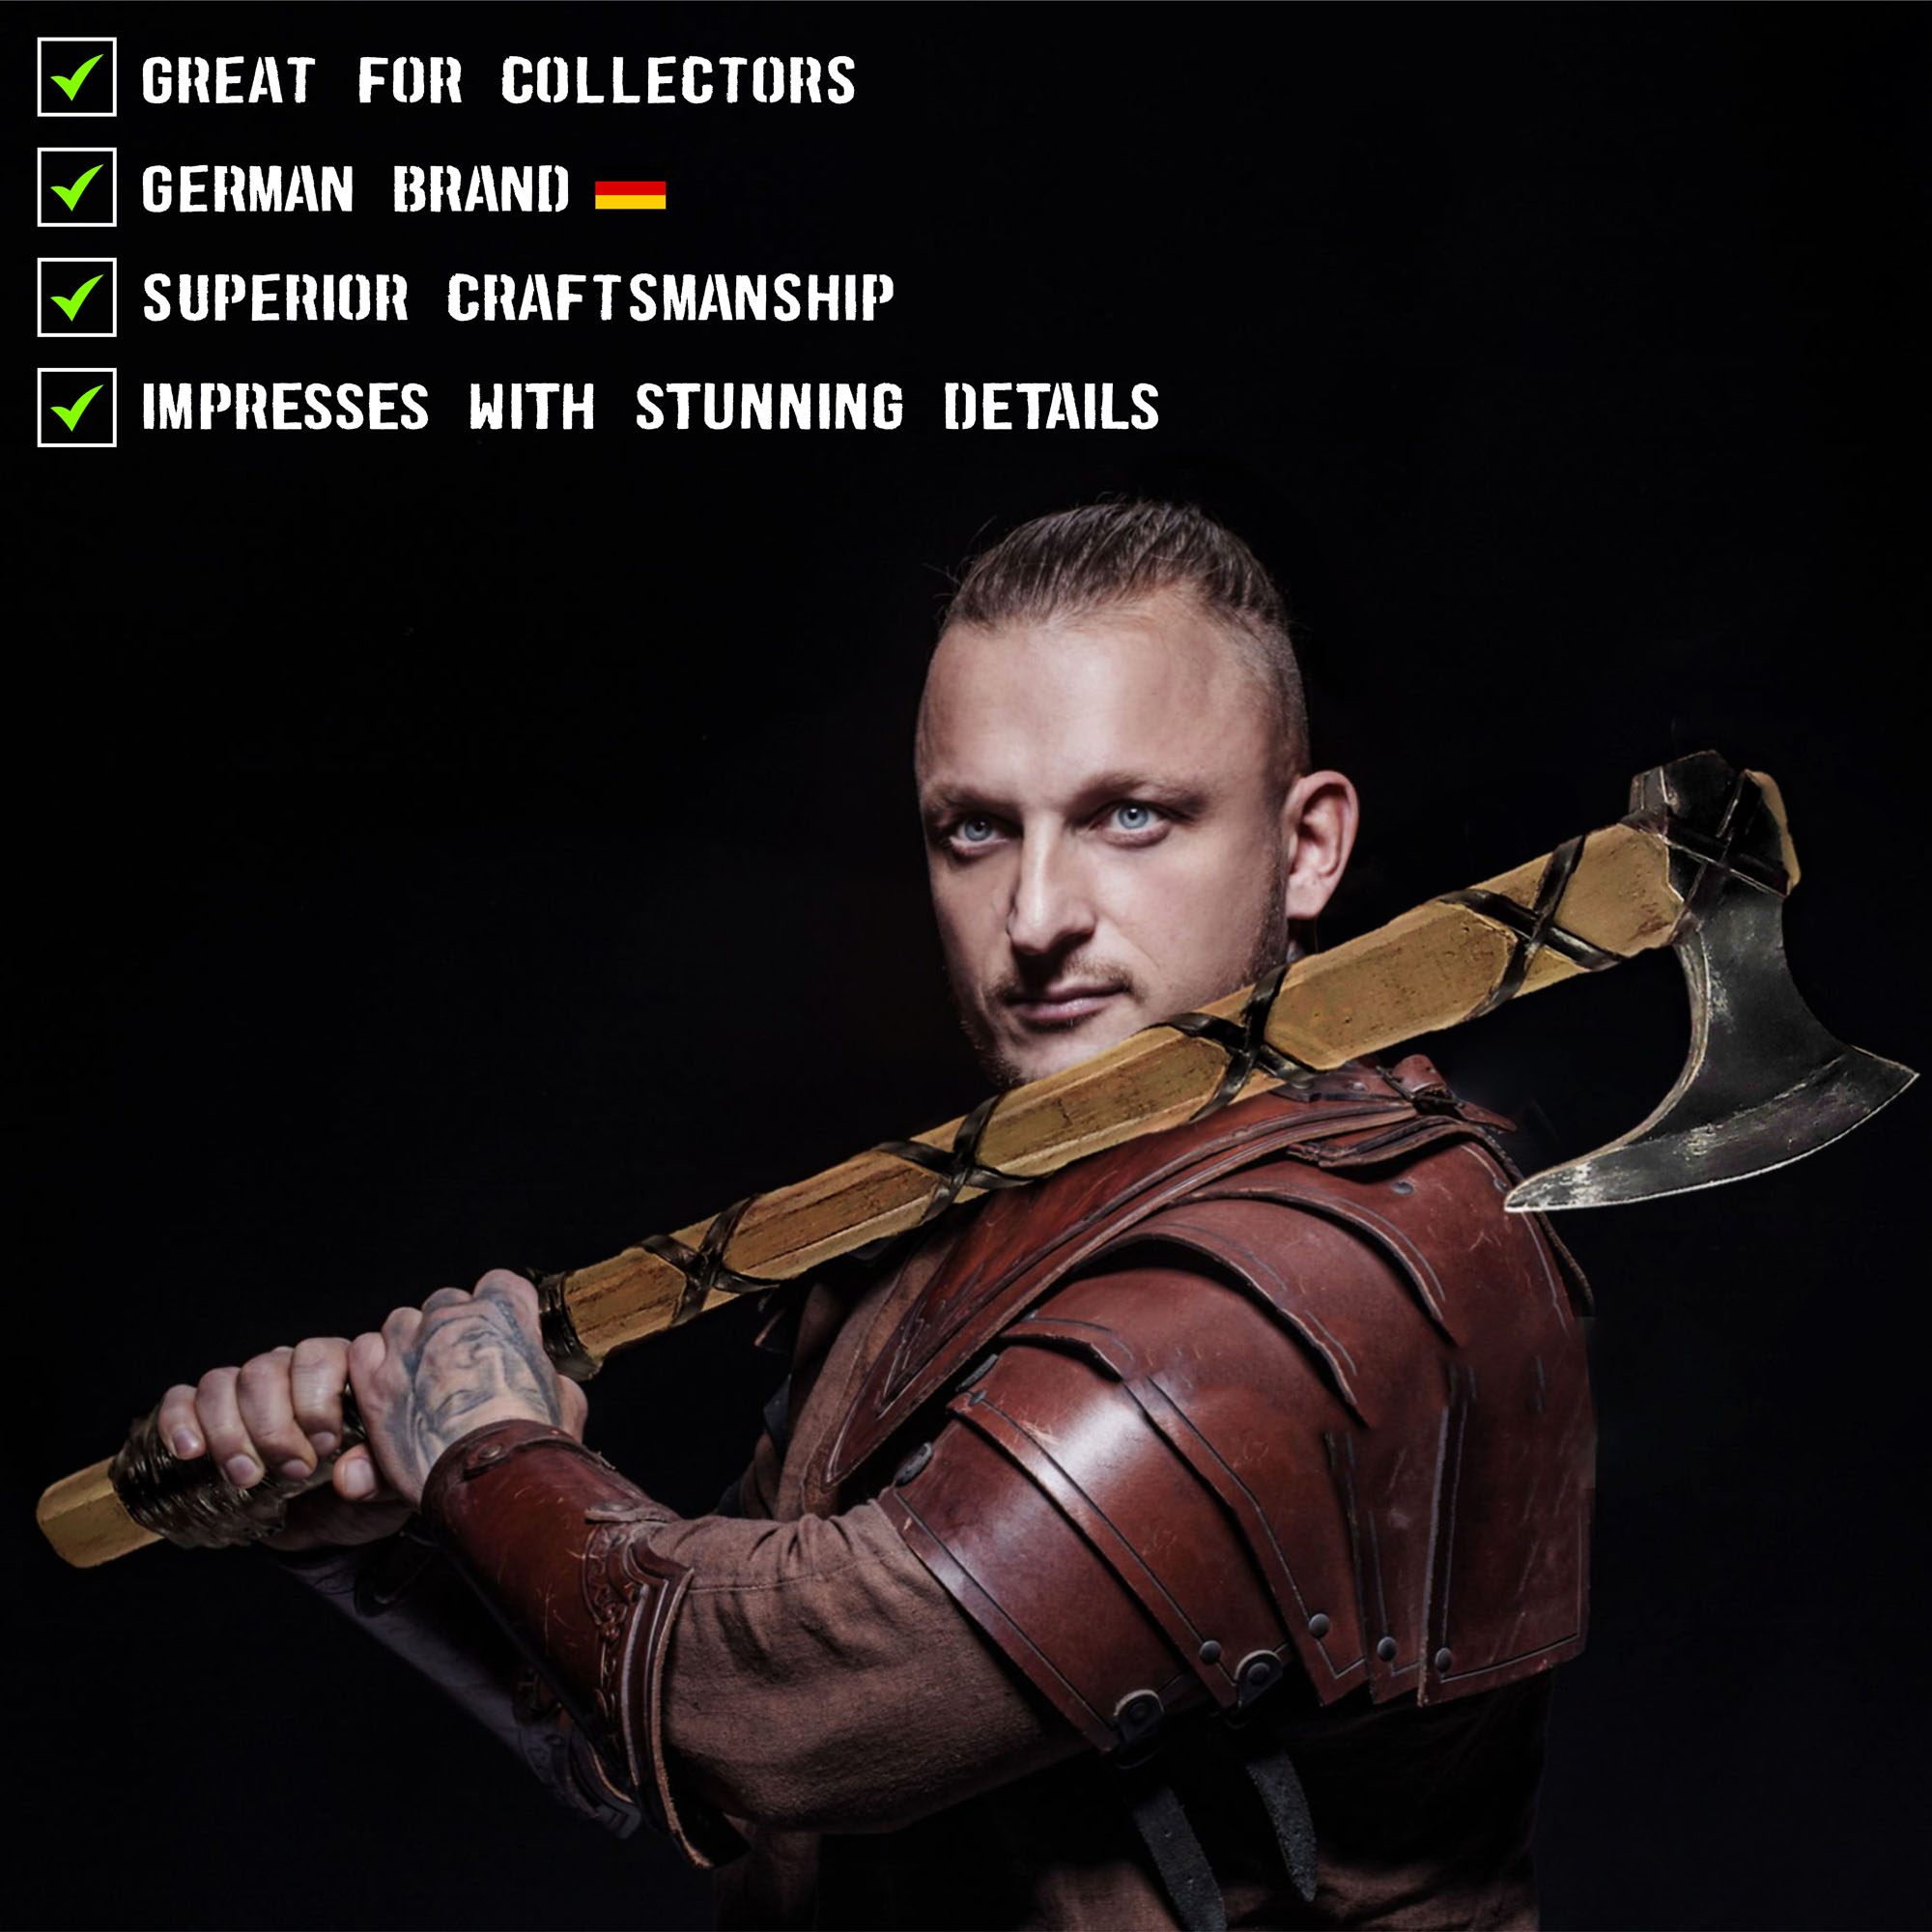 Vikings – Ragnar foam axe